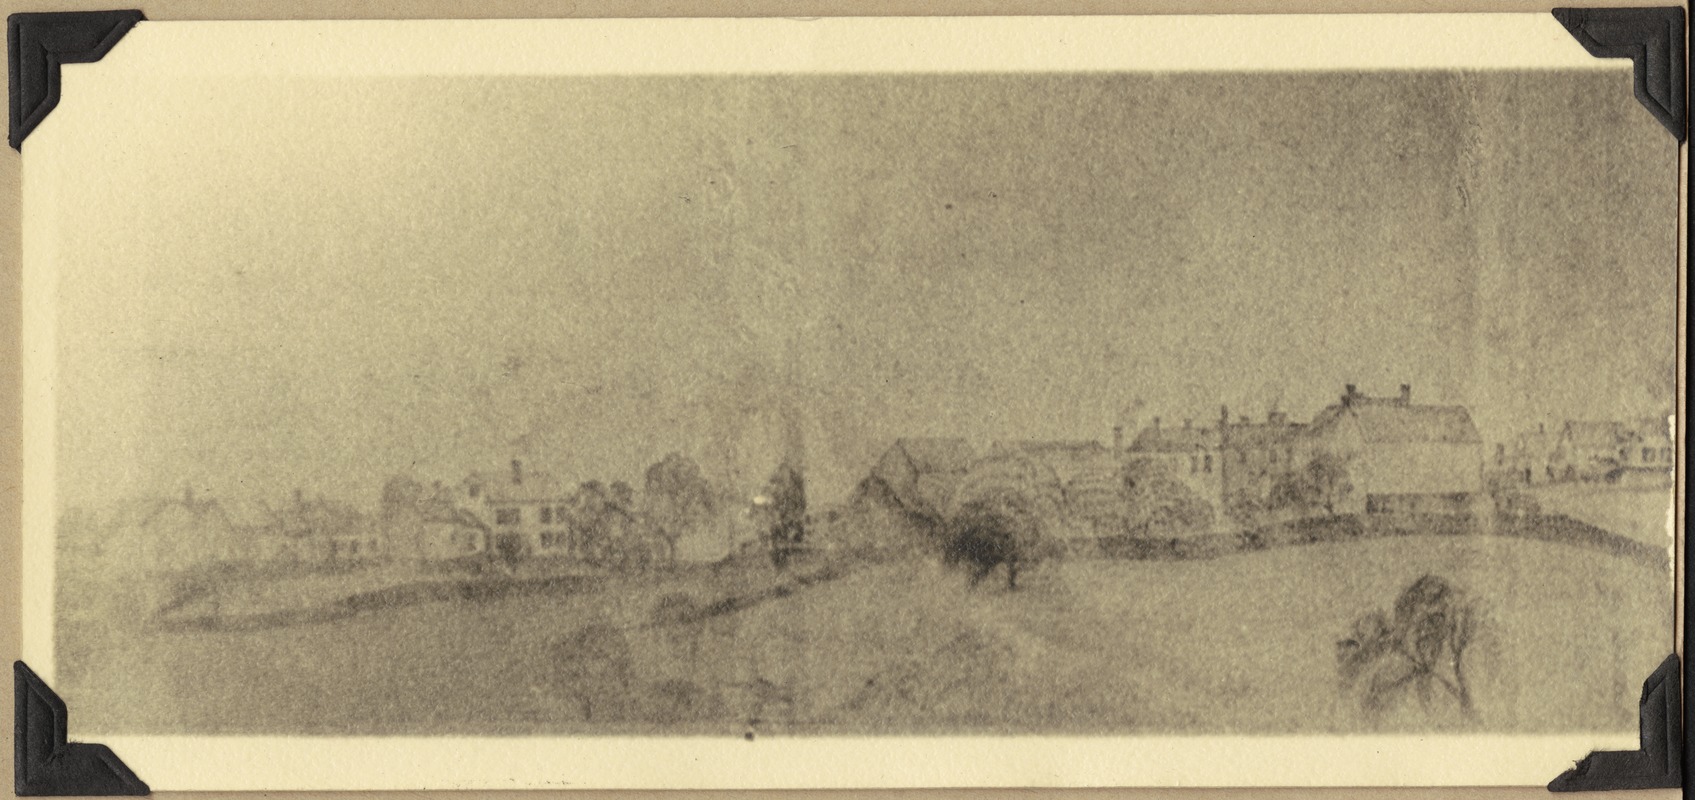 Carlisle center before 1868